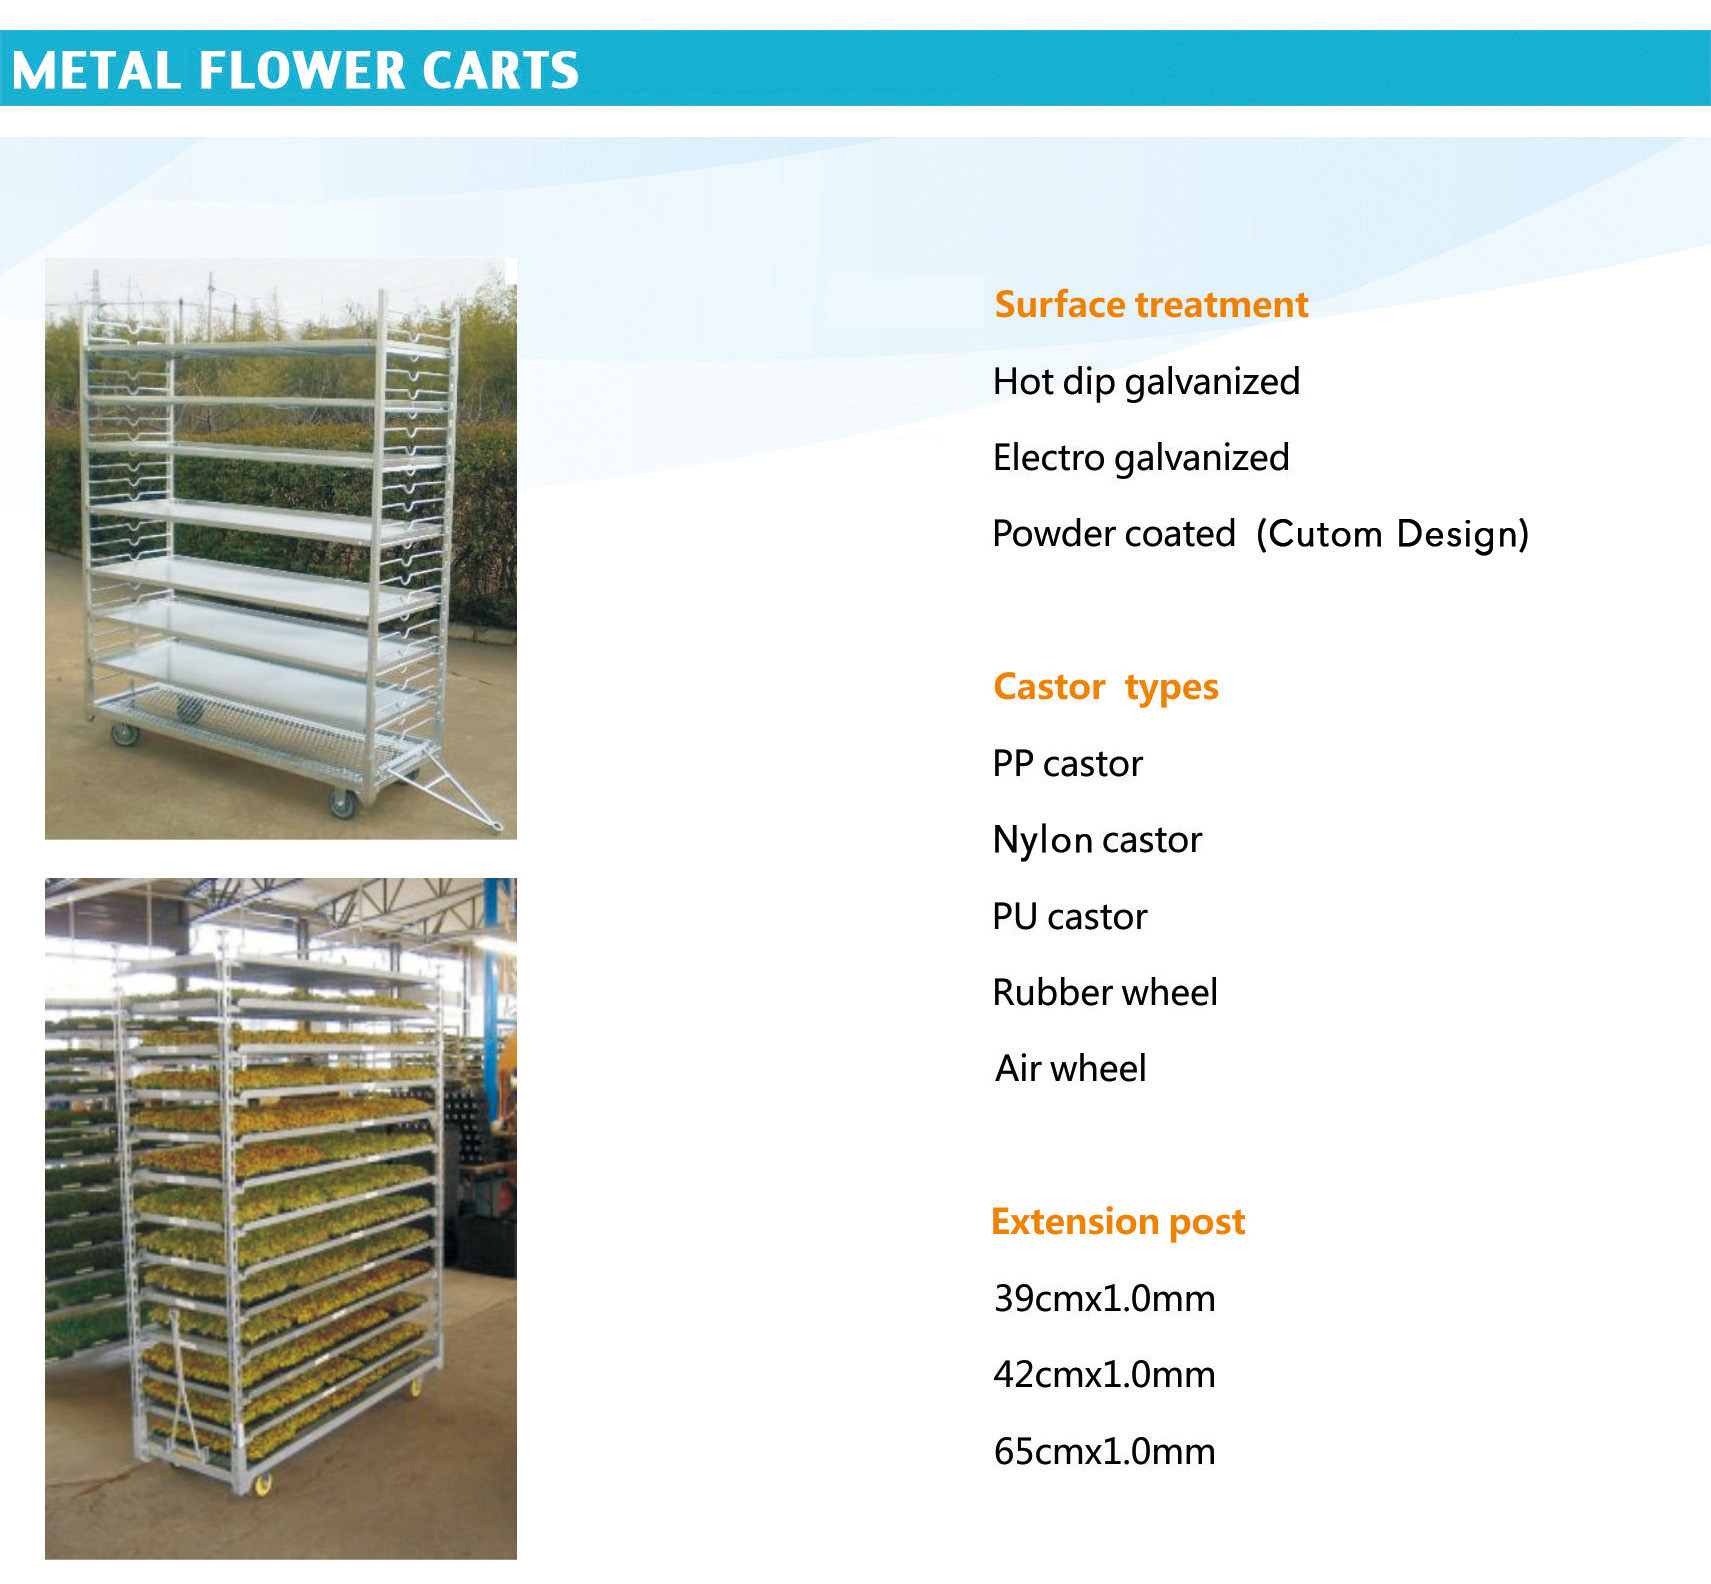 Metal Flower Carts